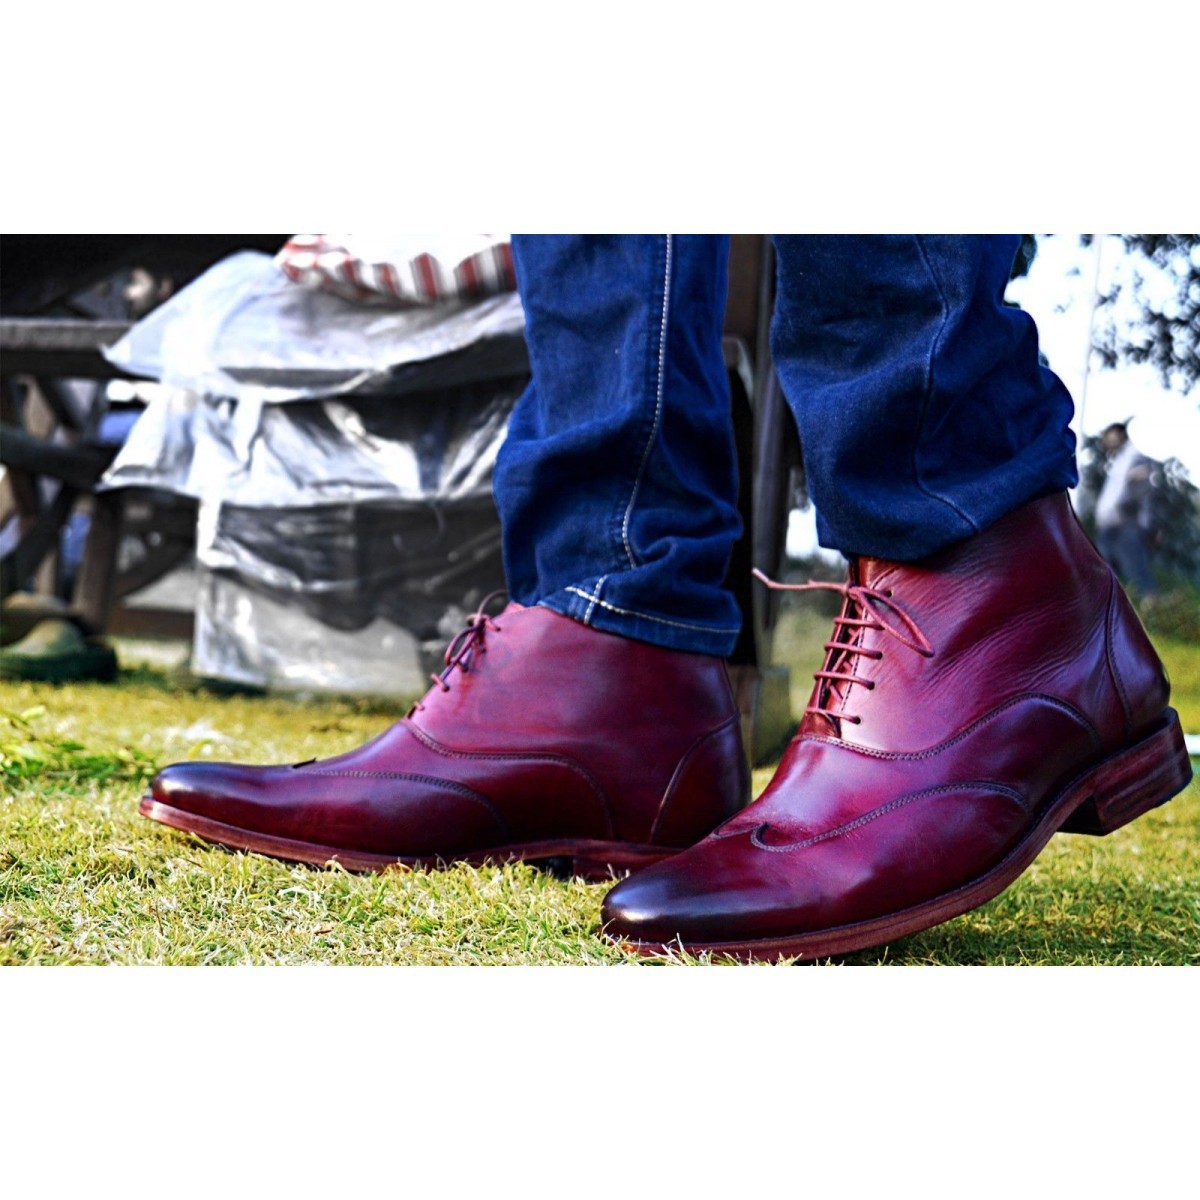 NEW Handmade Maroon Chukka Denim Casual Boots Ankle High Boots 2019